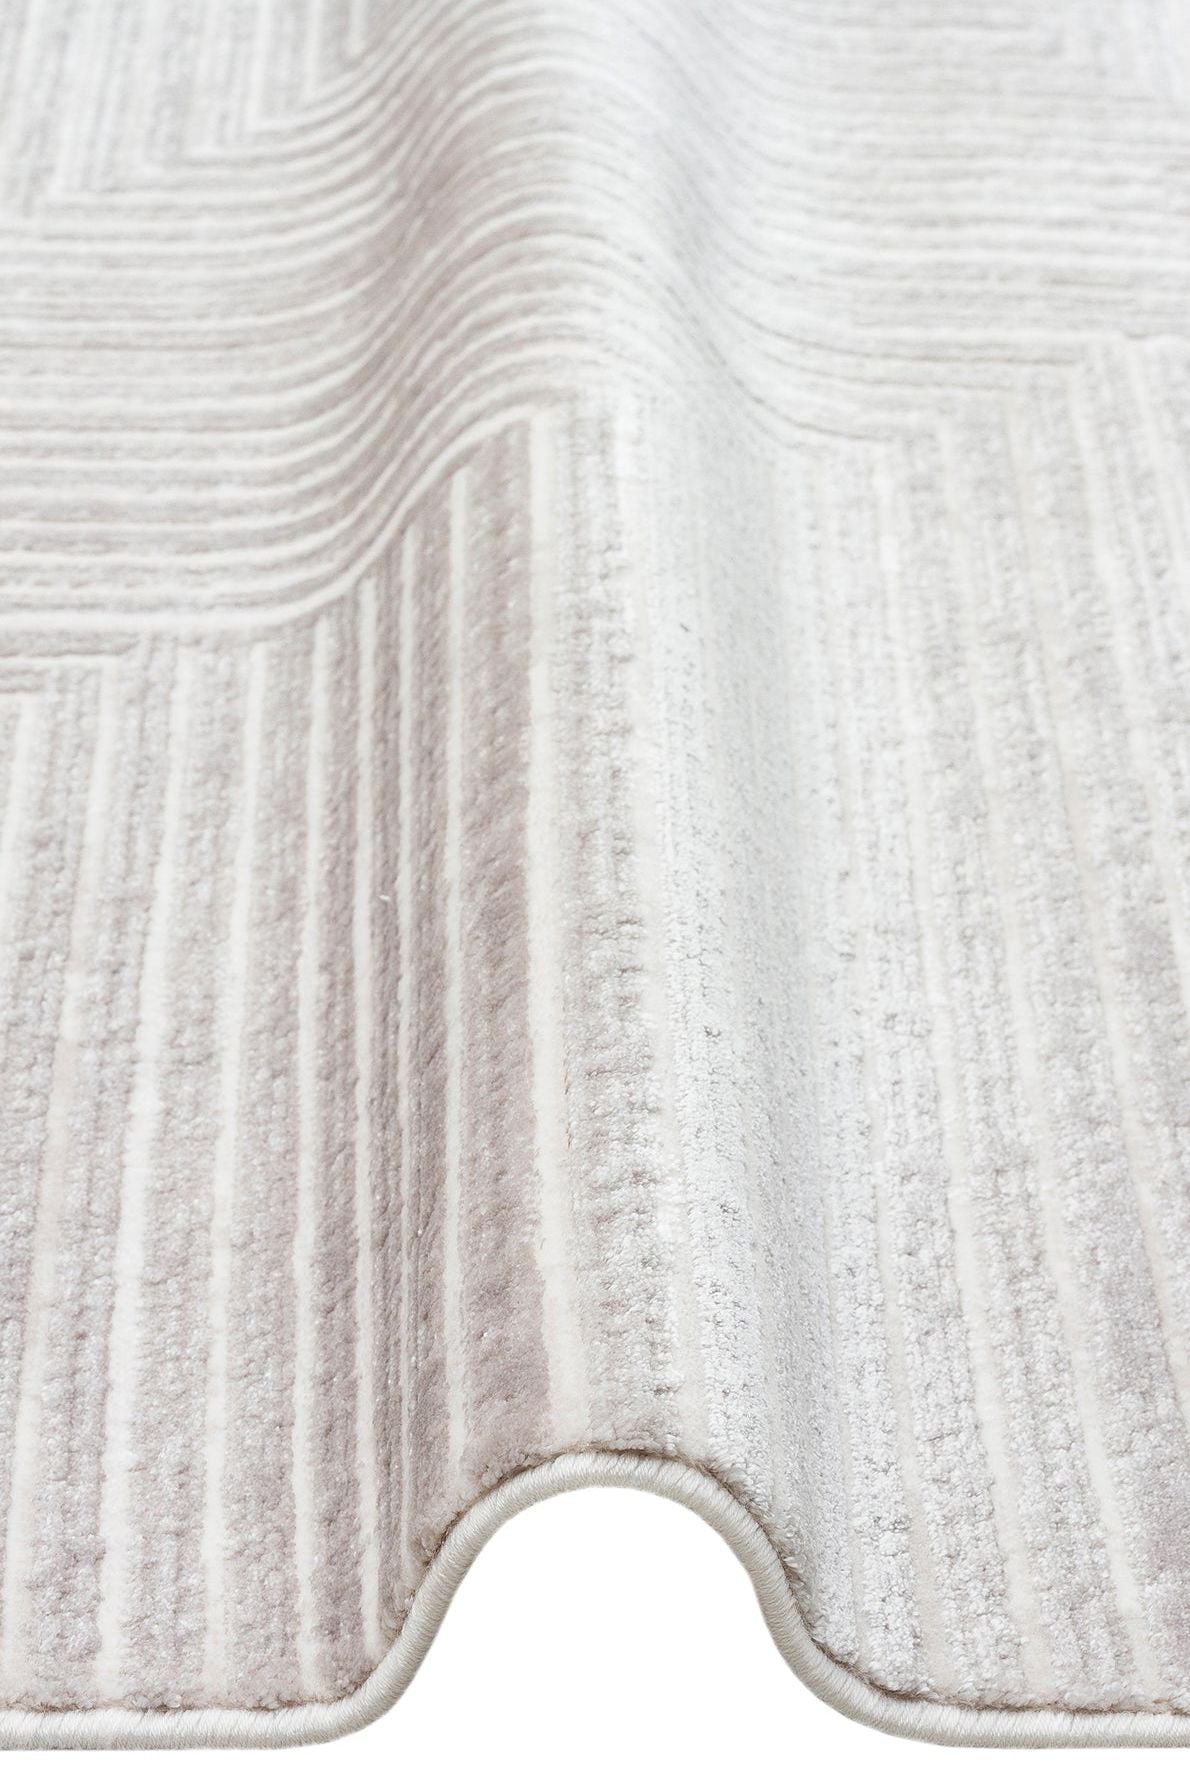 #Turkish_Carpets_Rugs# #Modern_Carpets# #Abrash_Carpets#Modern Carpets Made With AcrylicLky 02 Silver Cream